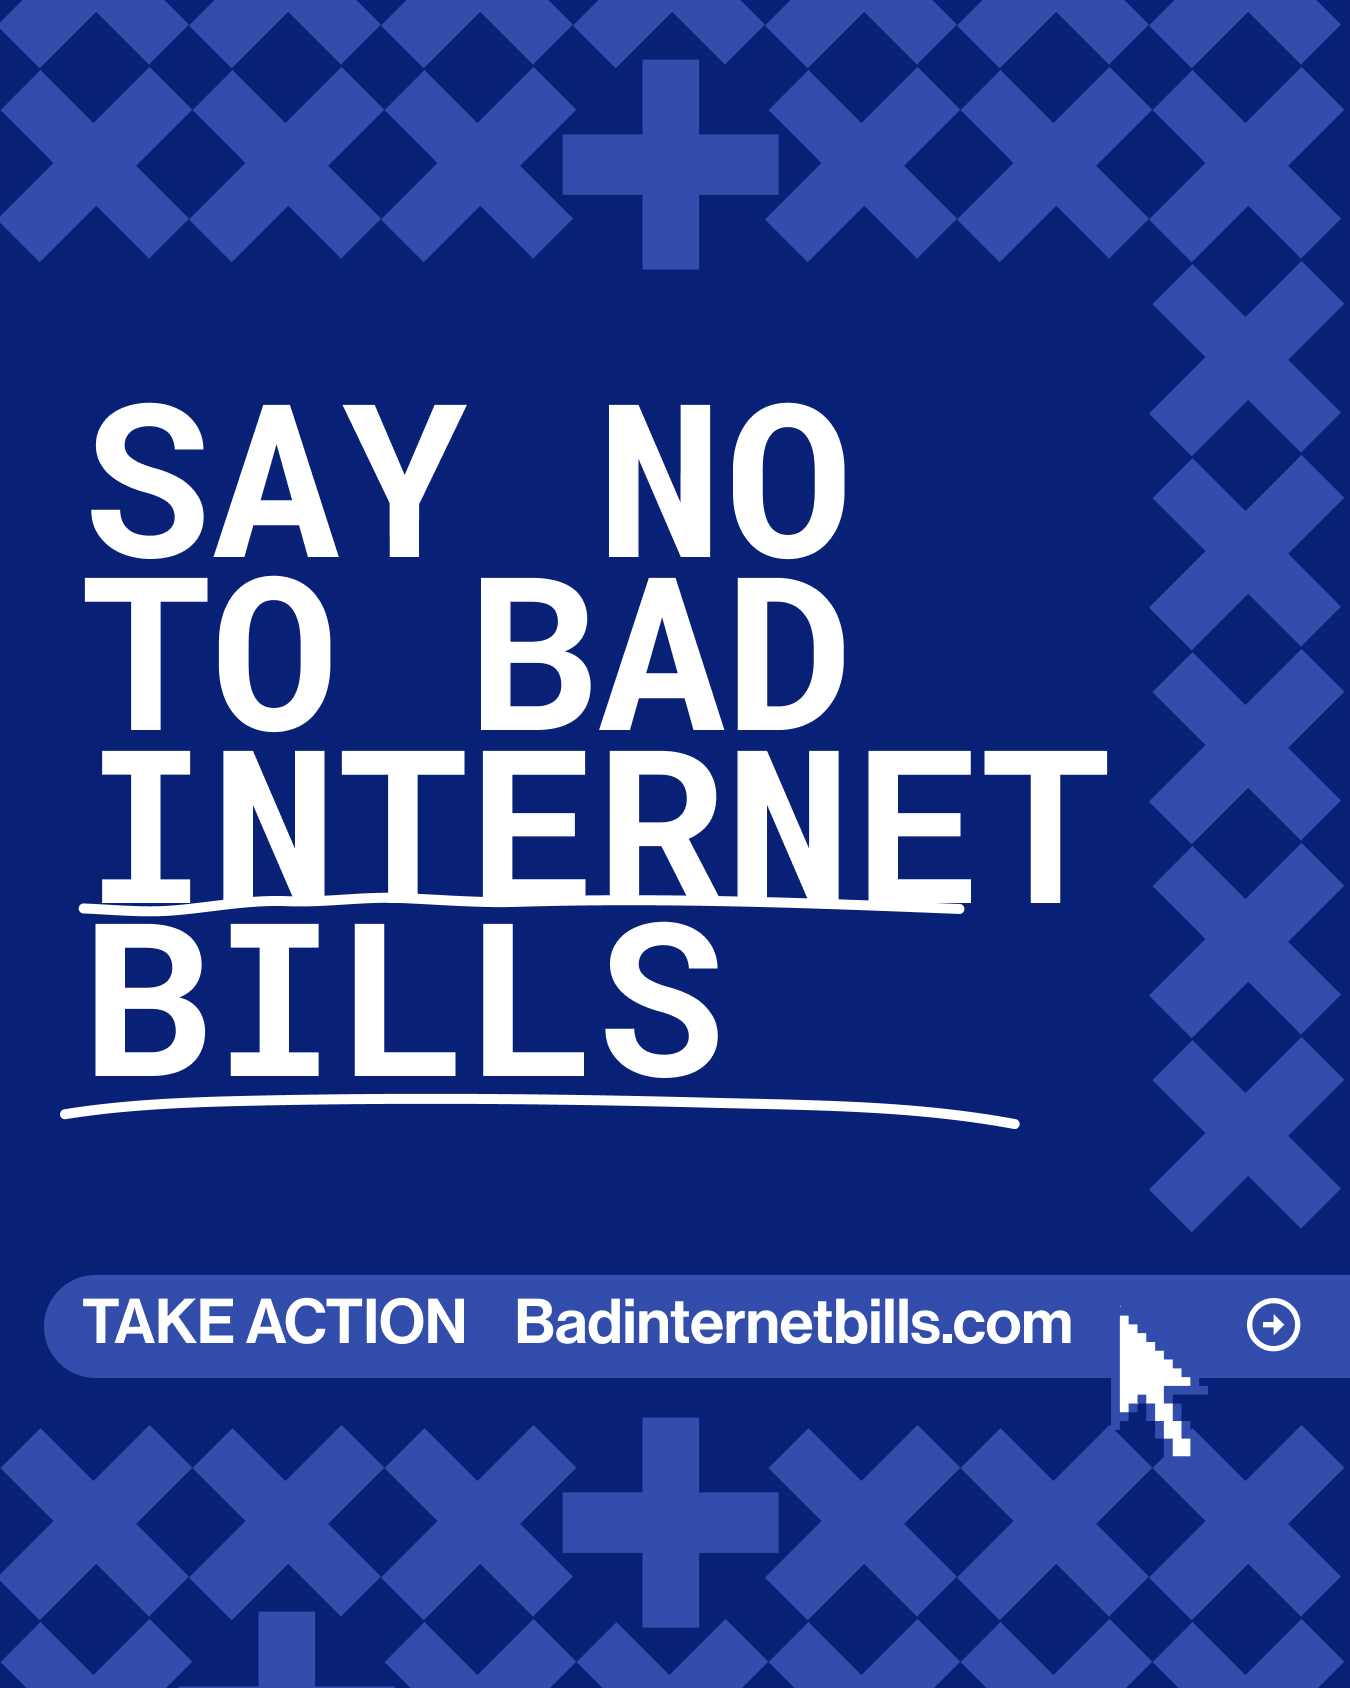 Say NO to bad internet bills. Take action at badinternetbills.com